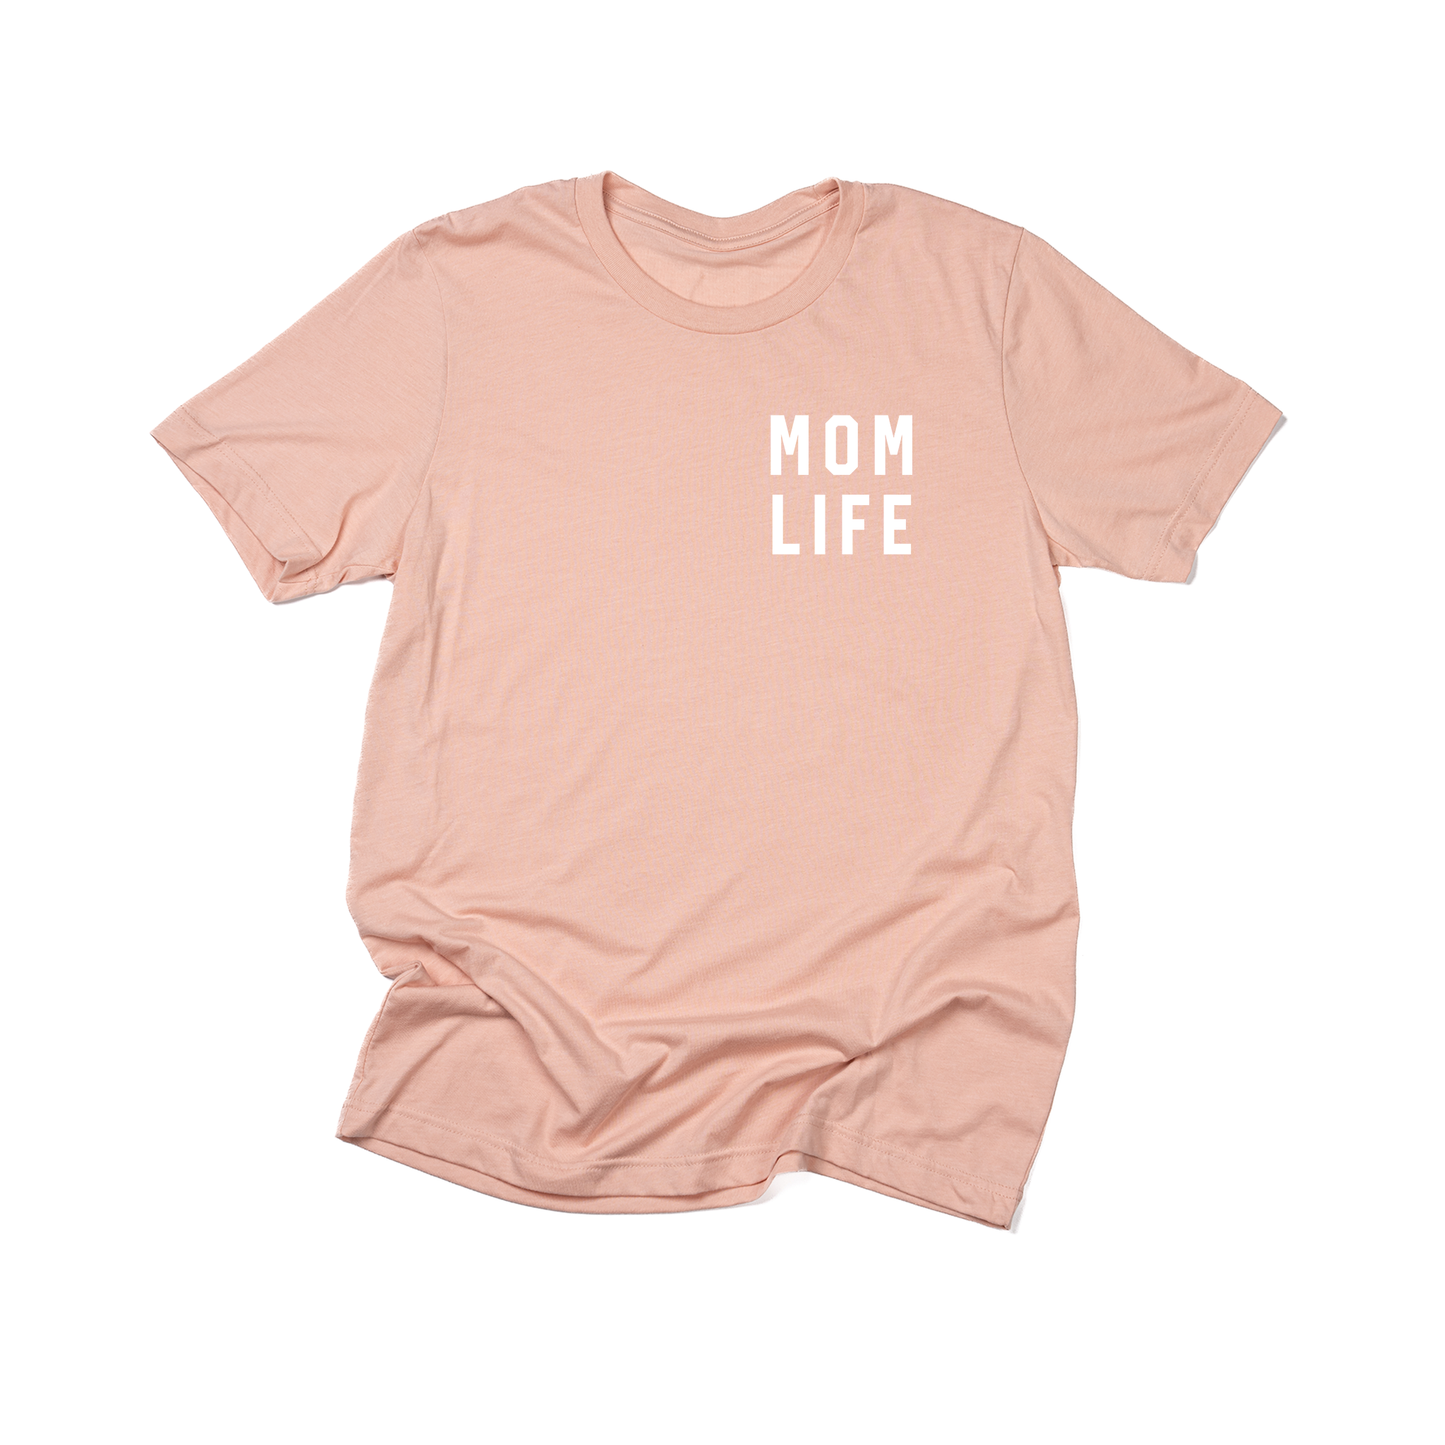 Mom Life (Pocket, White) - Tee (Peach)